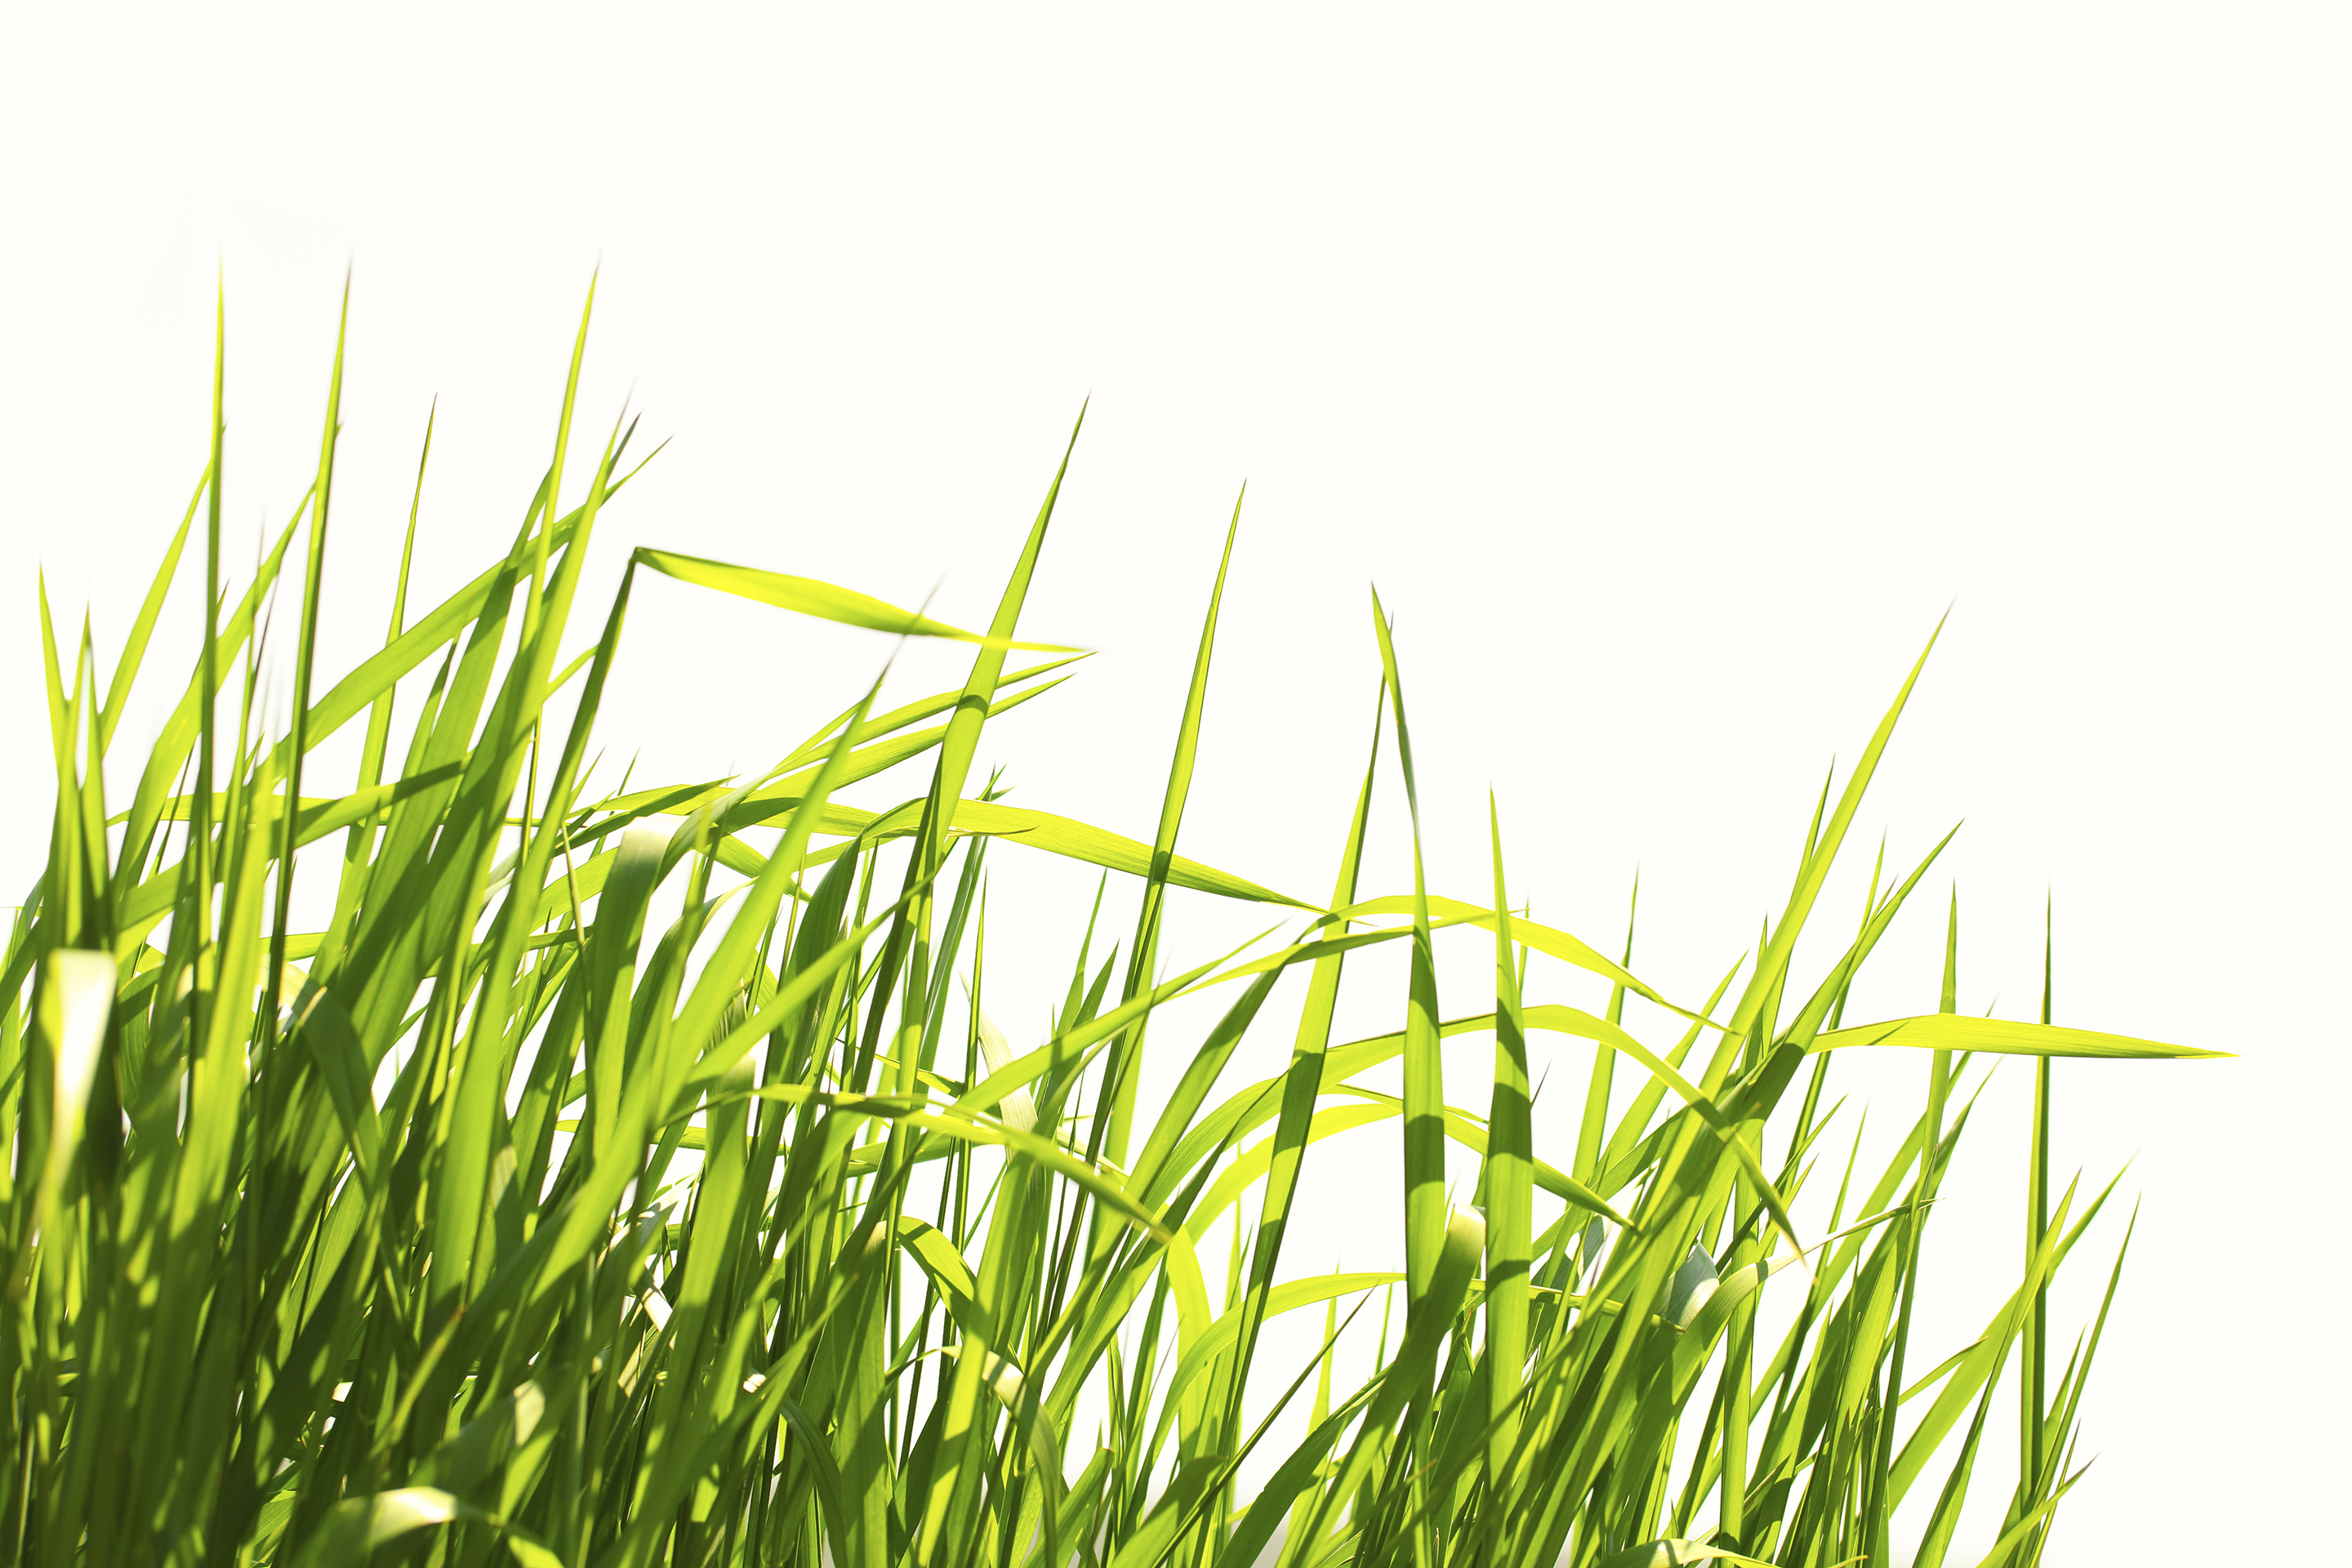 Grass against white background